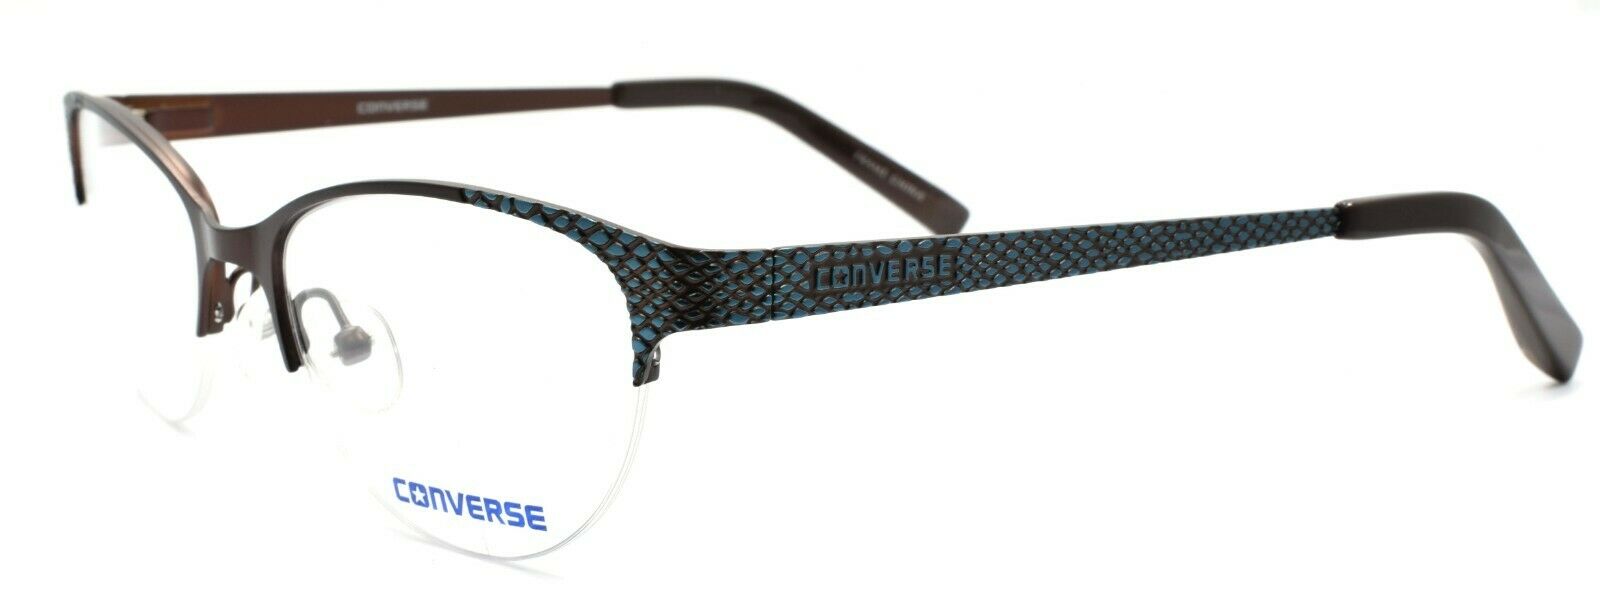 1-CONVERSE Q049 Women's Eyeglasses Frames Half-rim 50-17-130 Brown + CASE-751286288995-IKSpecs